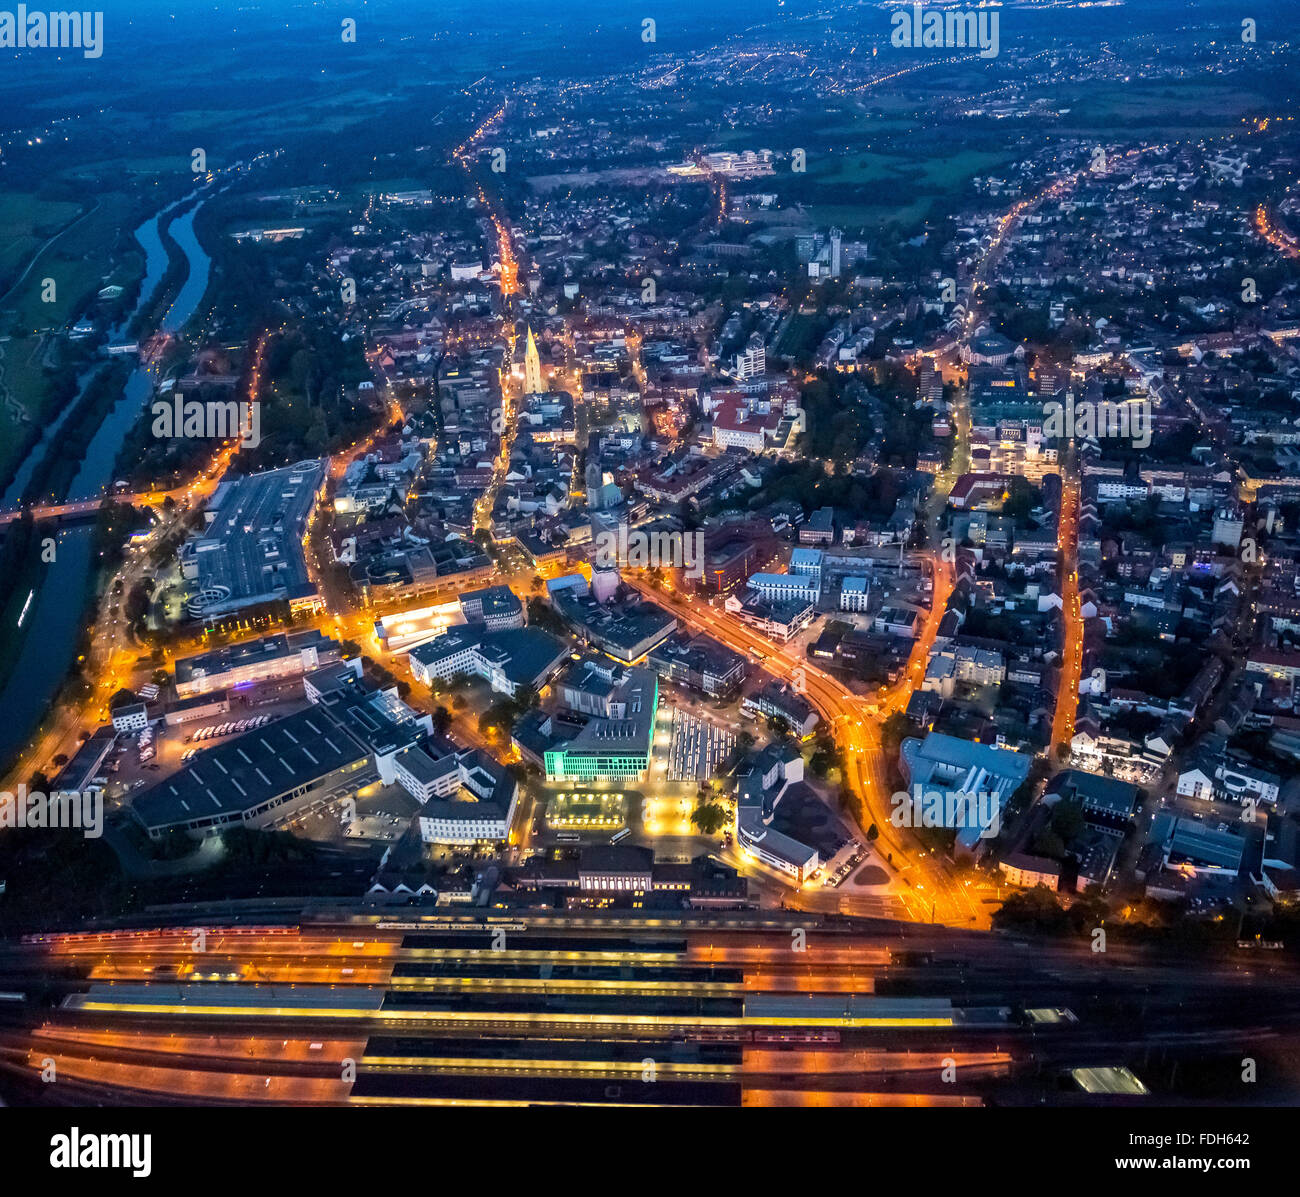 Vista aerea, panoramica della città di notte, riqualificazione urbana Hamm Neue Mitte di Bahnhofstrasse, Heinrich-von-Kleist-Forum,Center Foto Stock